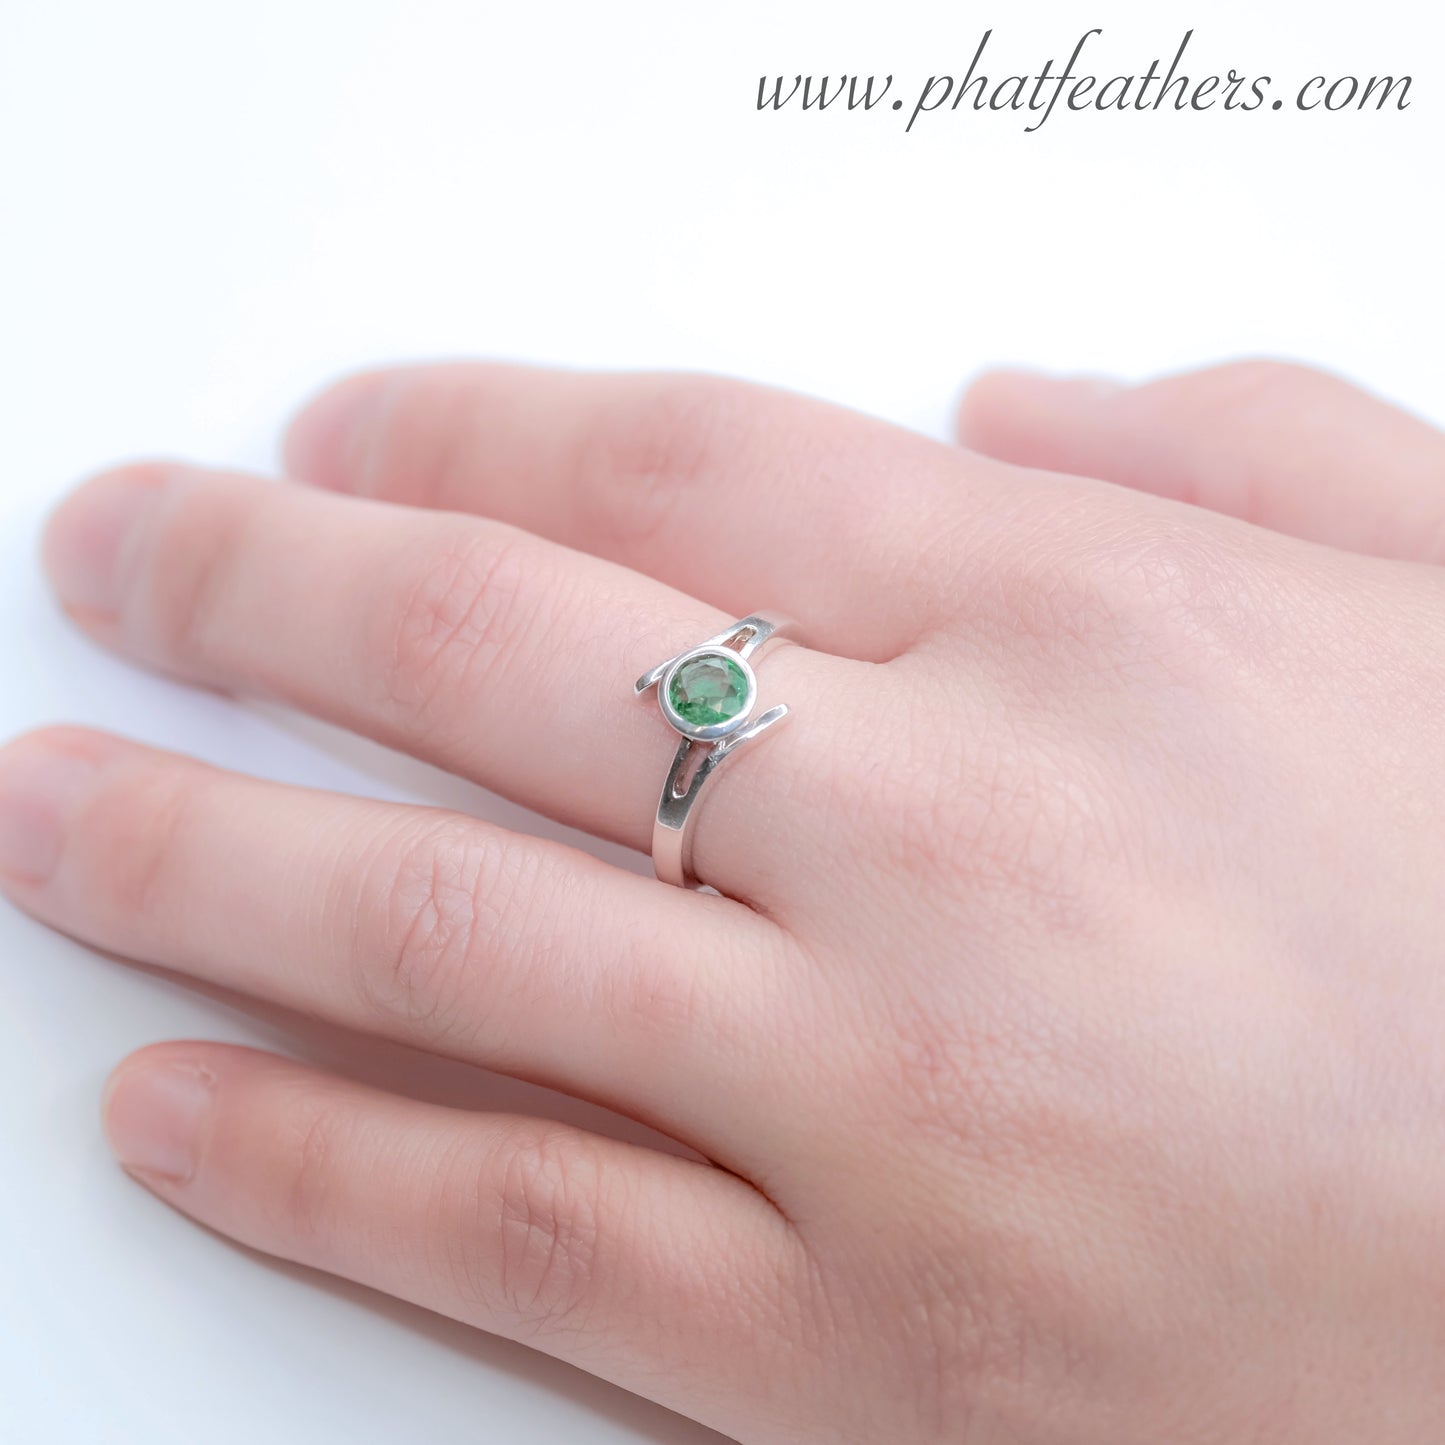 Chivor Emerald Ring Size M